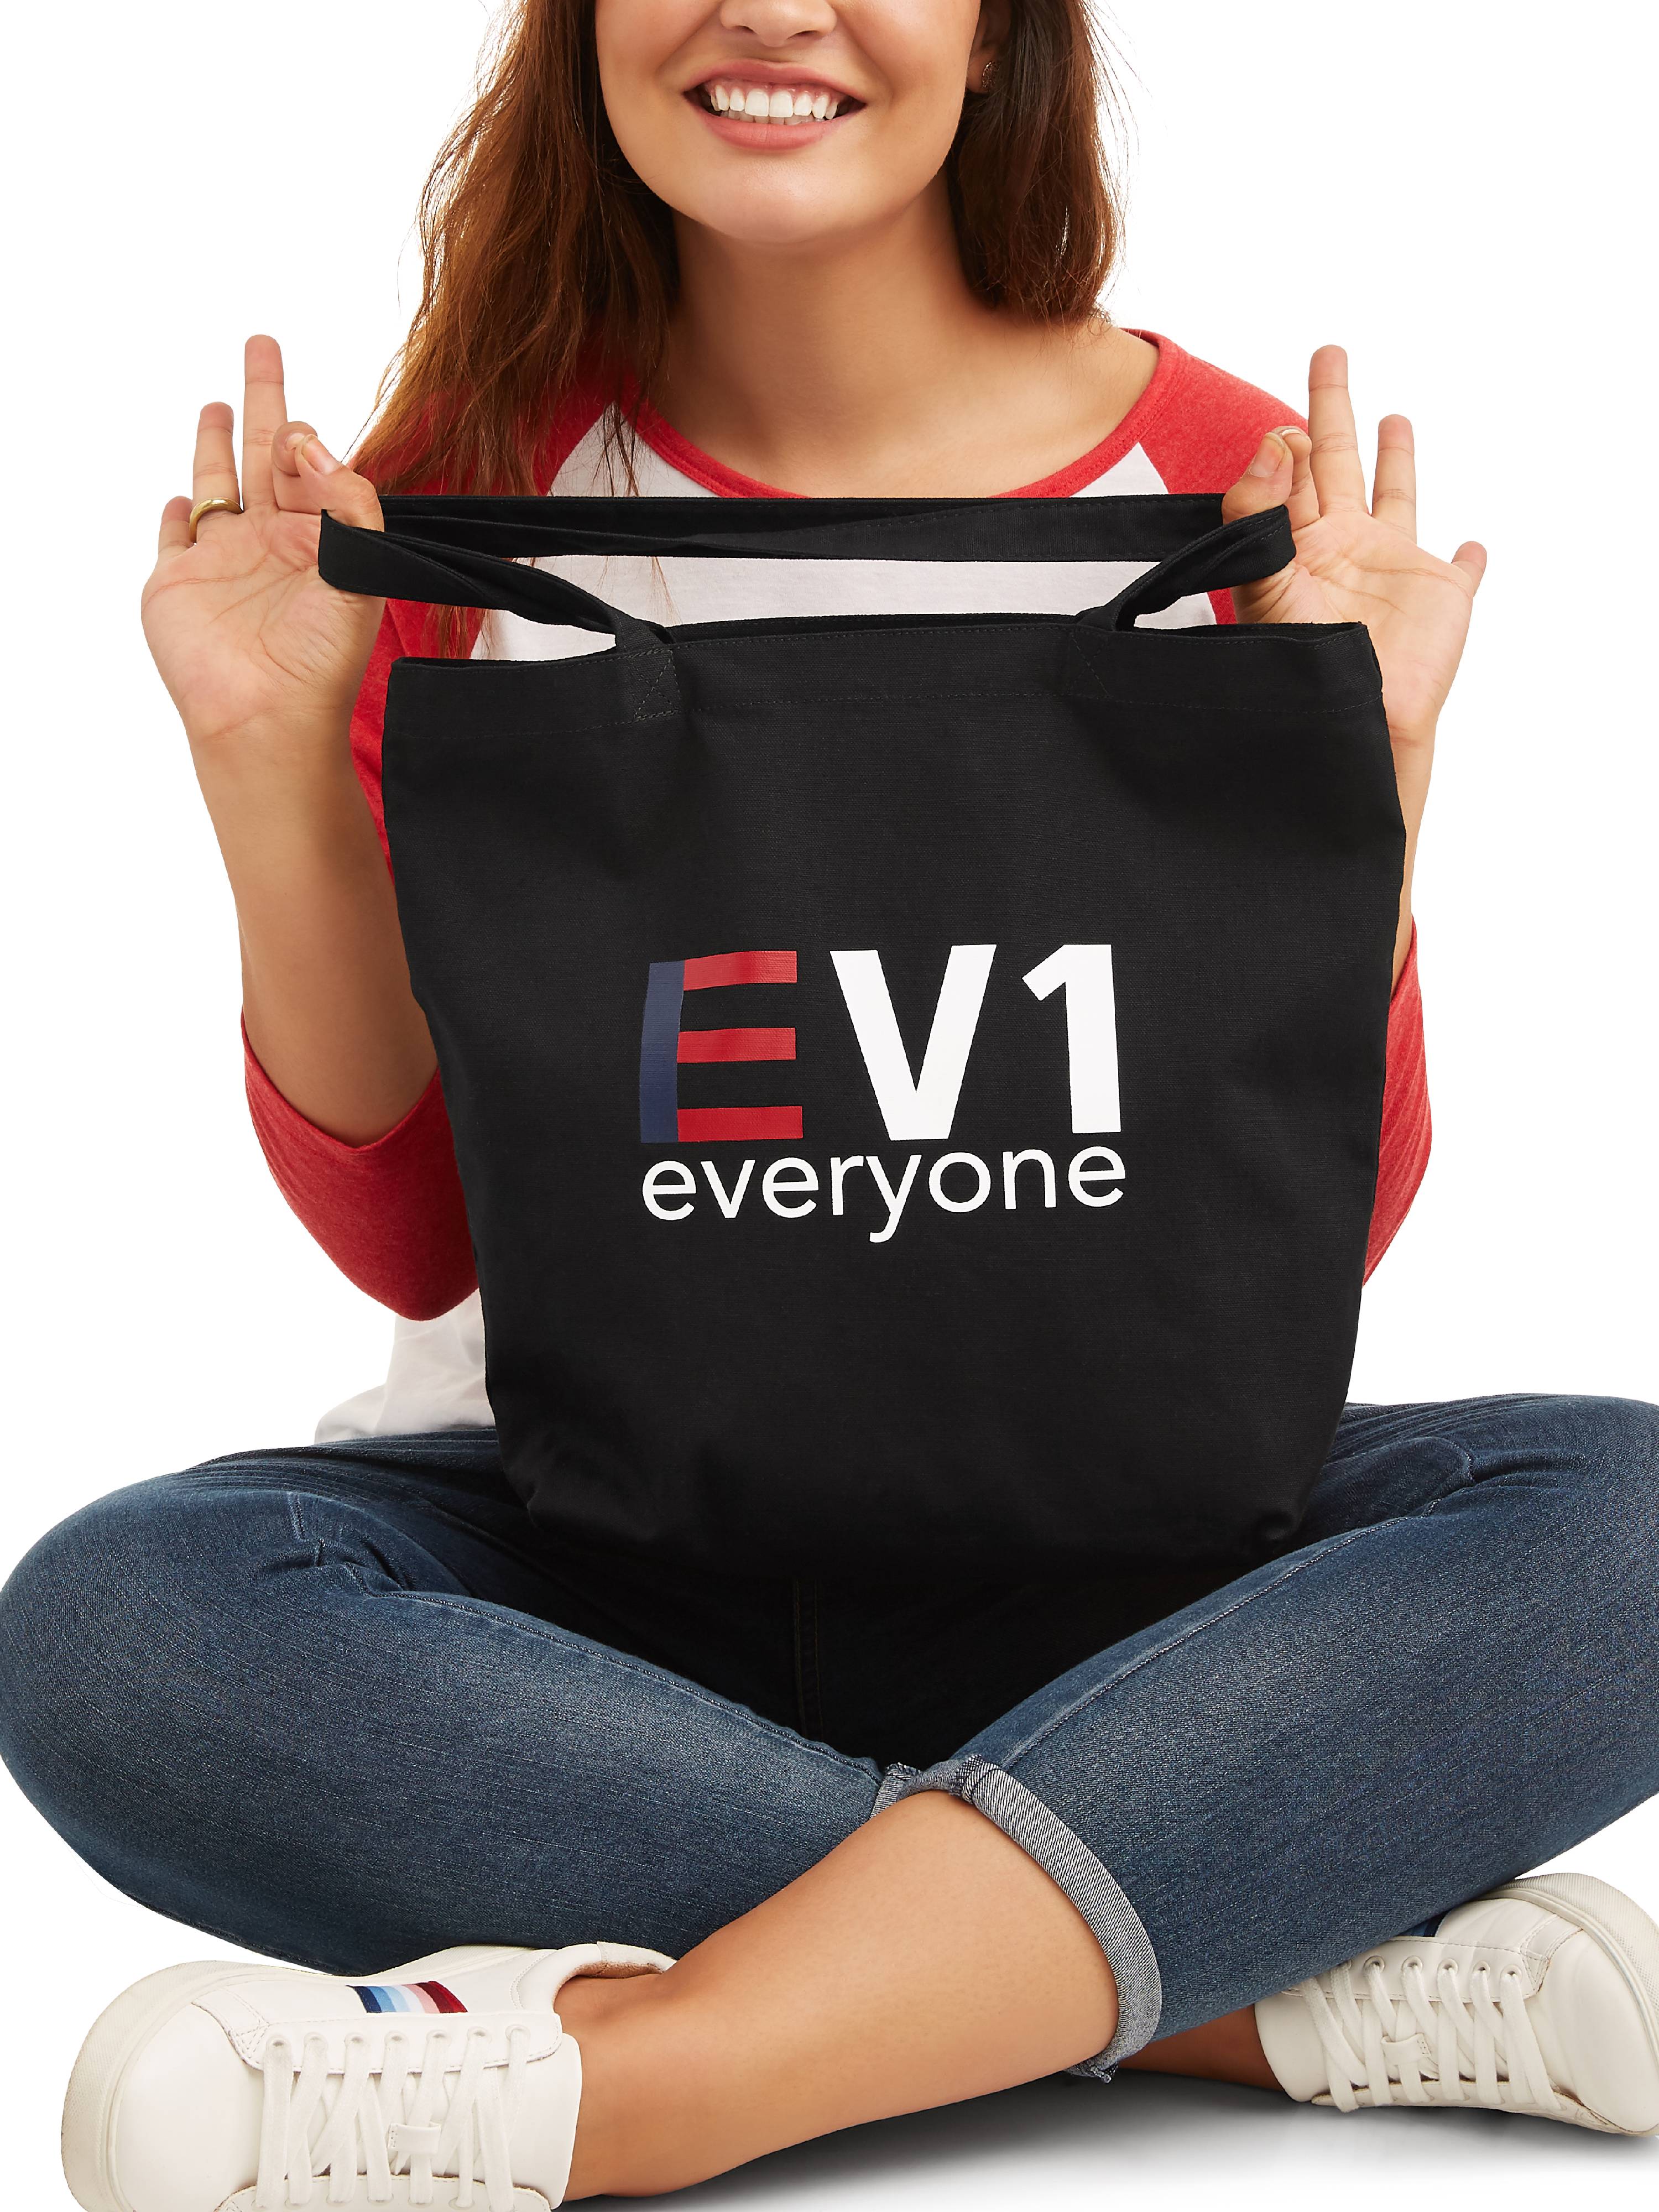 EV1 from Ellen DeGeneres "Everyone" Canvas Market Tote - image 3 of 3